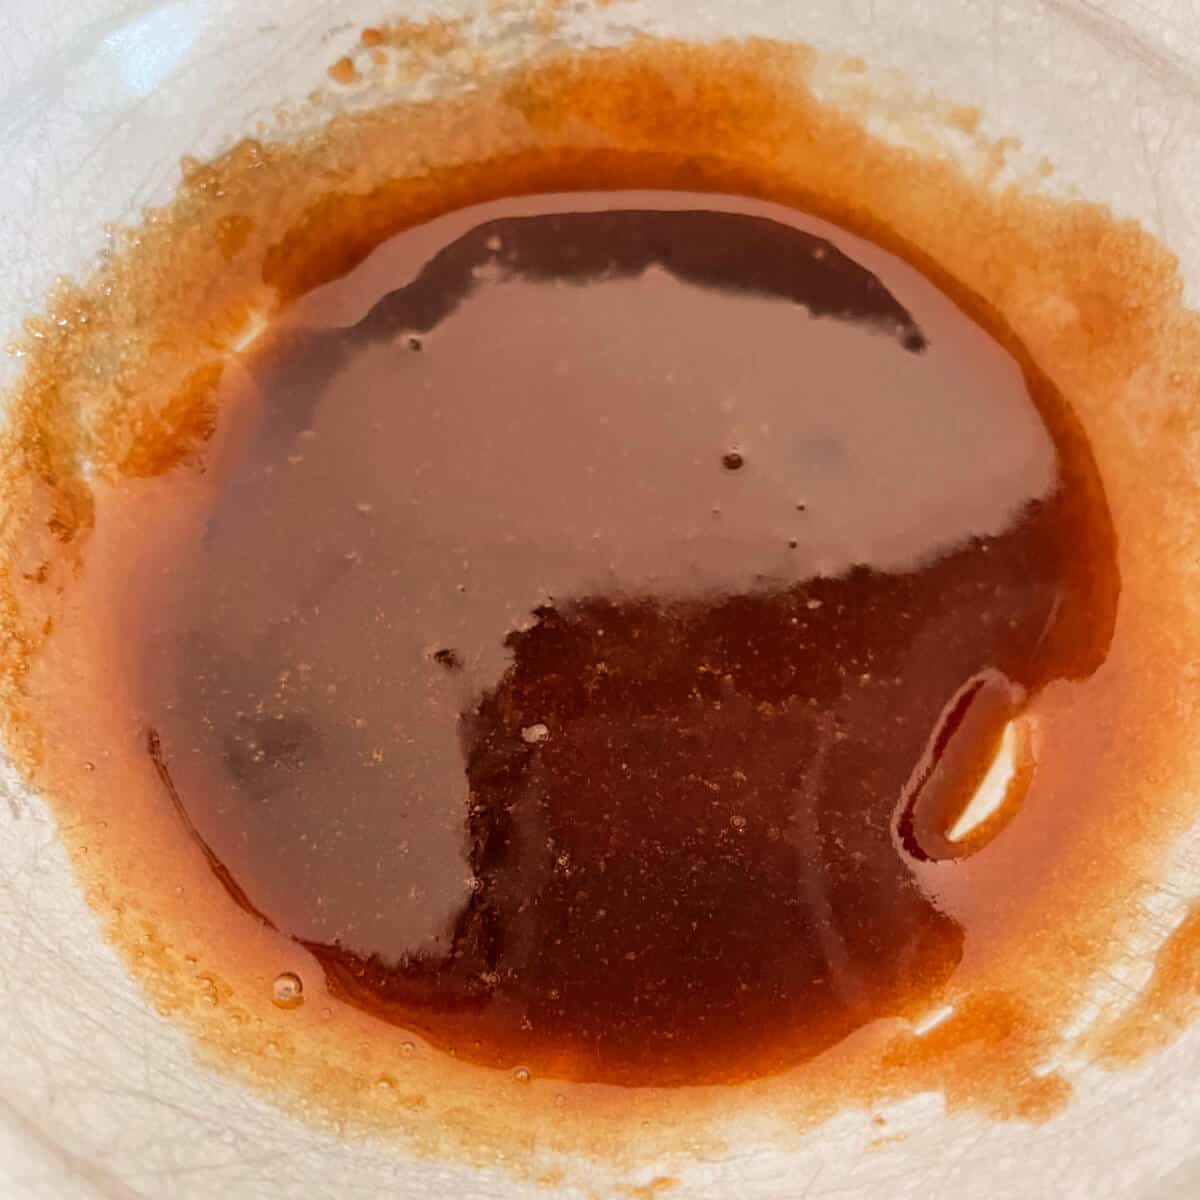 Syrup/sugar mixture in a bowl.